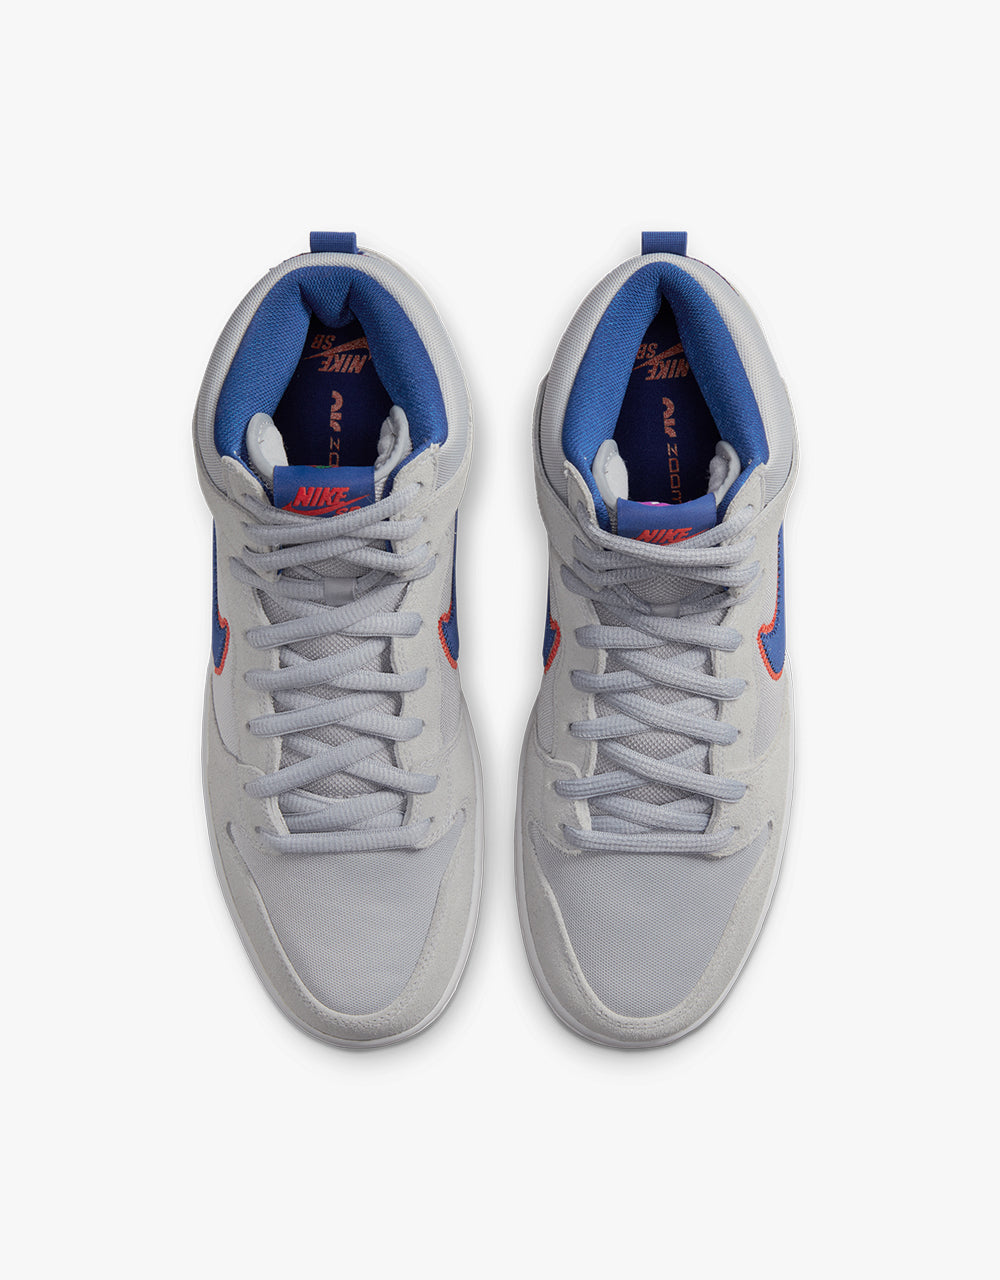 Nike SB 'Mets' Dunk High Premium Skate Shoes